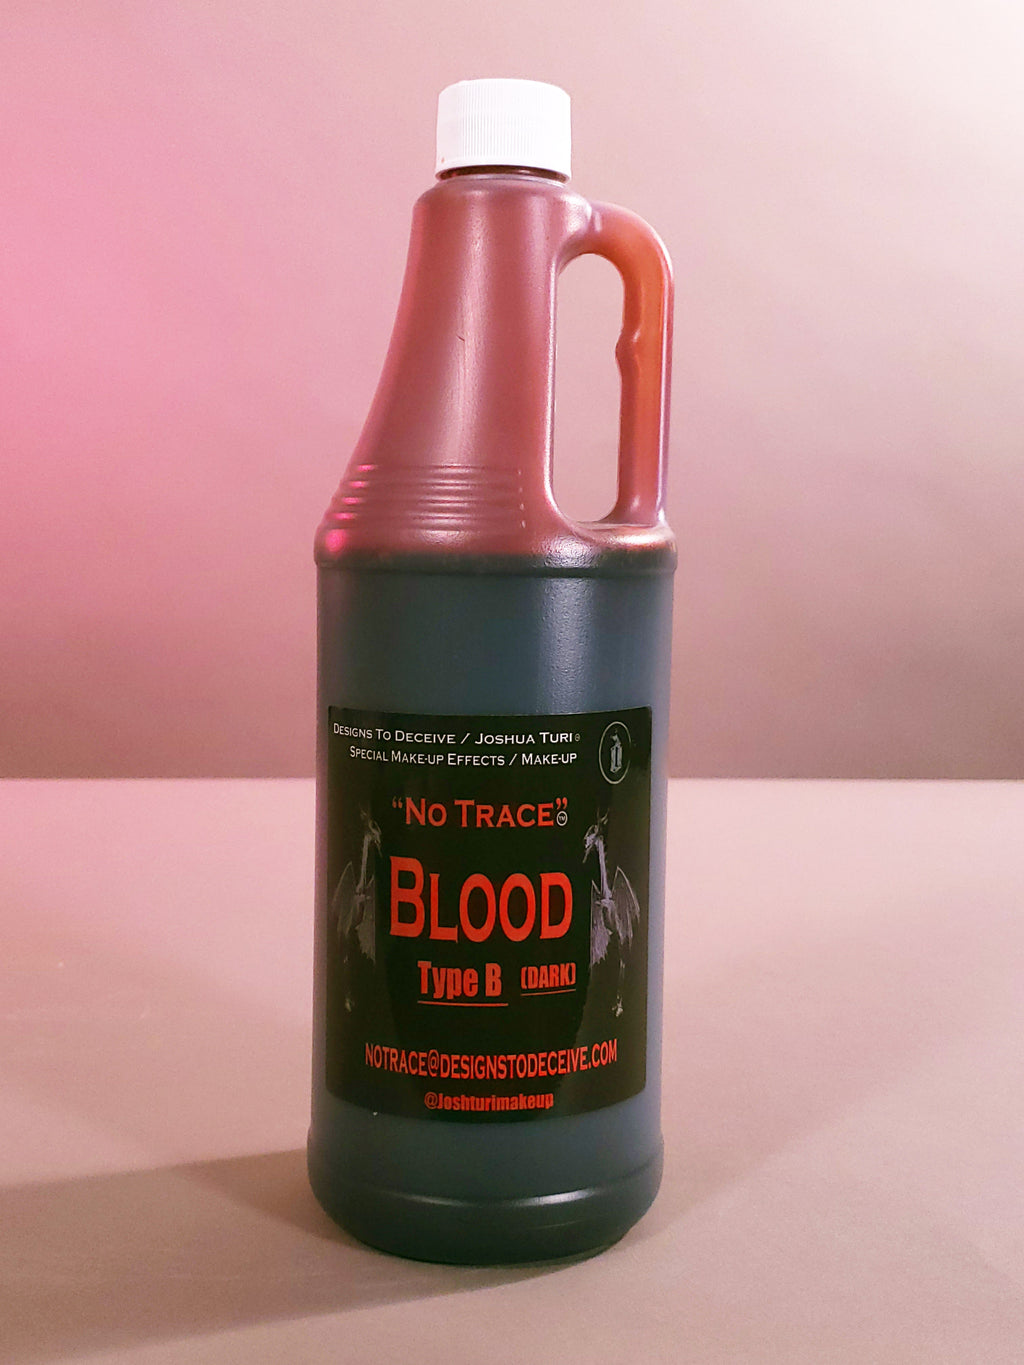 No-Trace Blood Type B - Dark